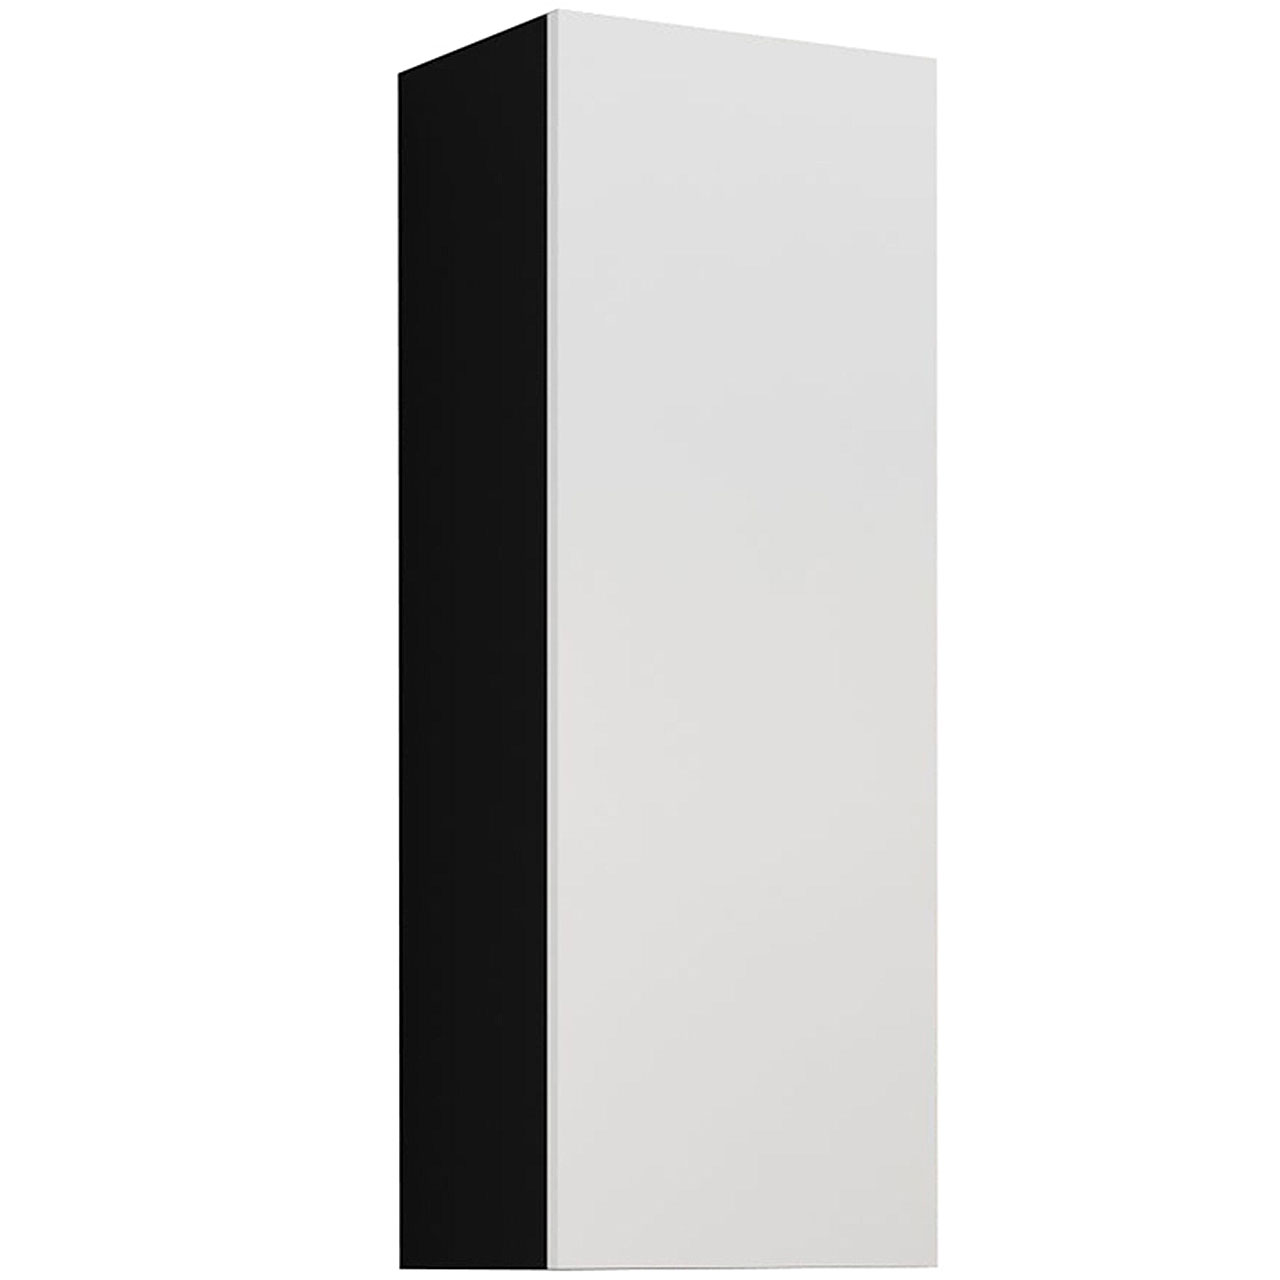 Wall cabinet 90 VIGO VG5C black / white gloss